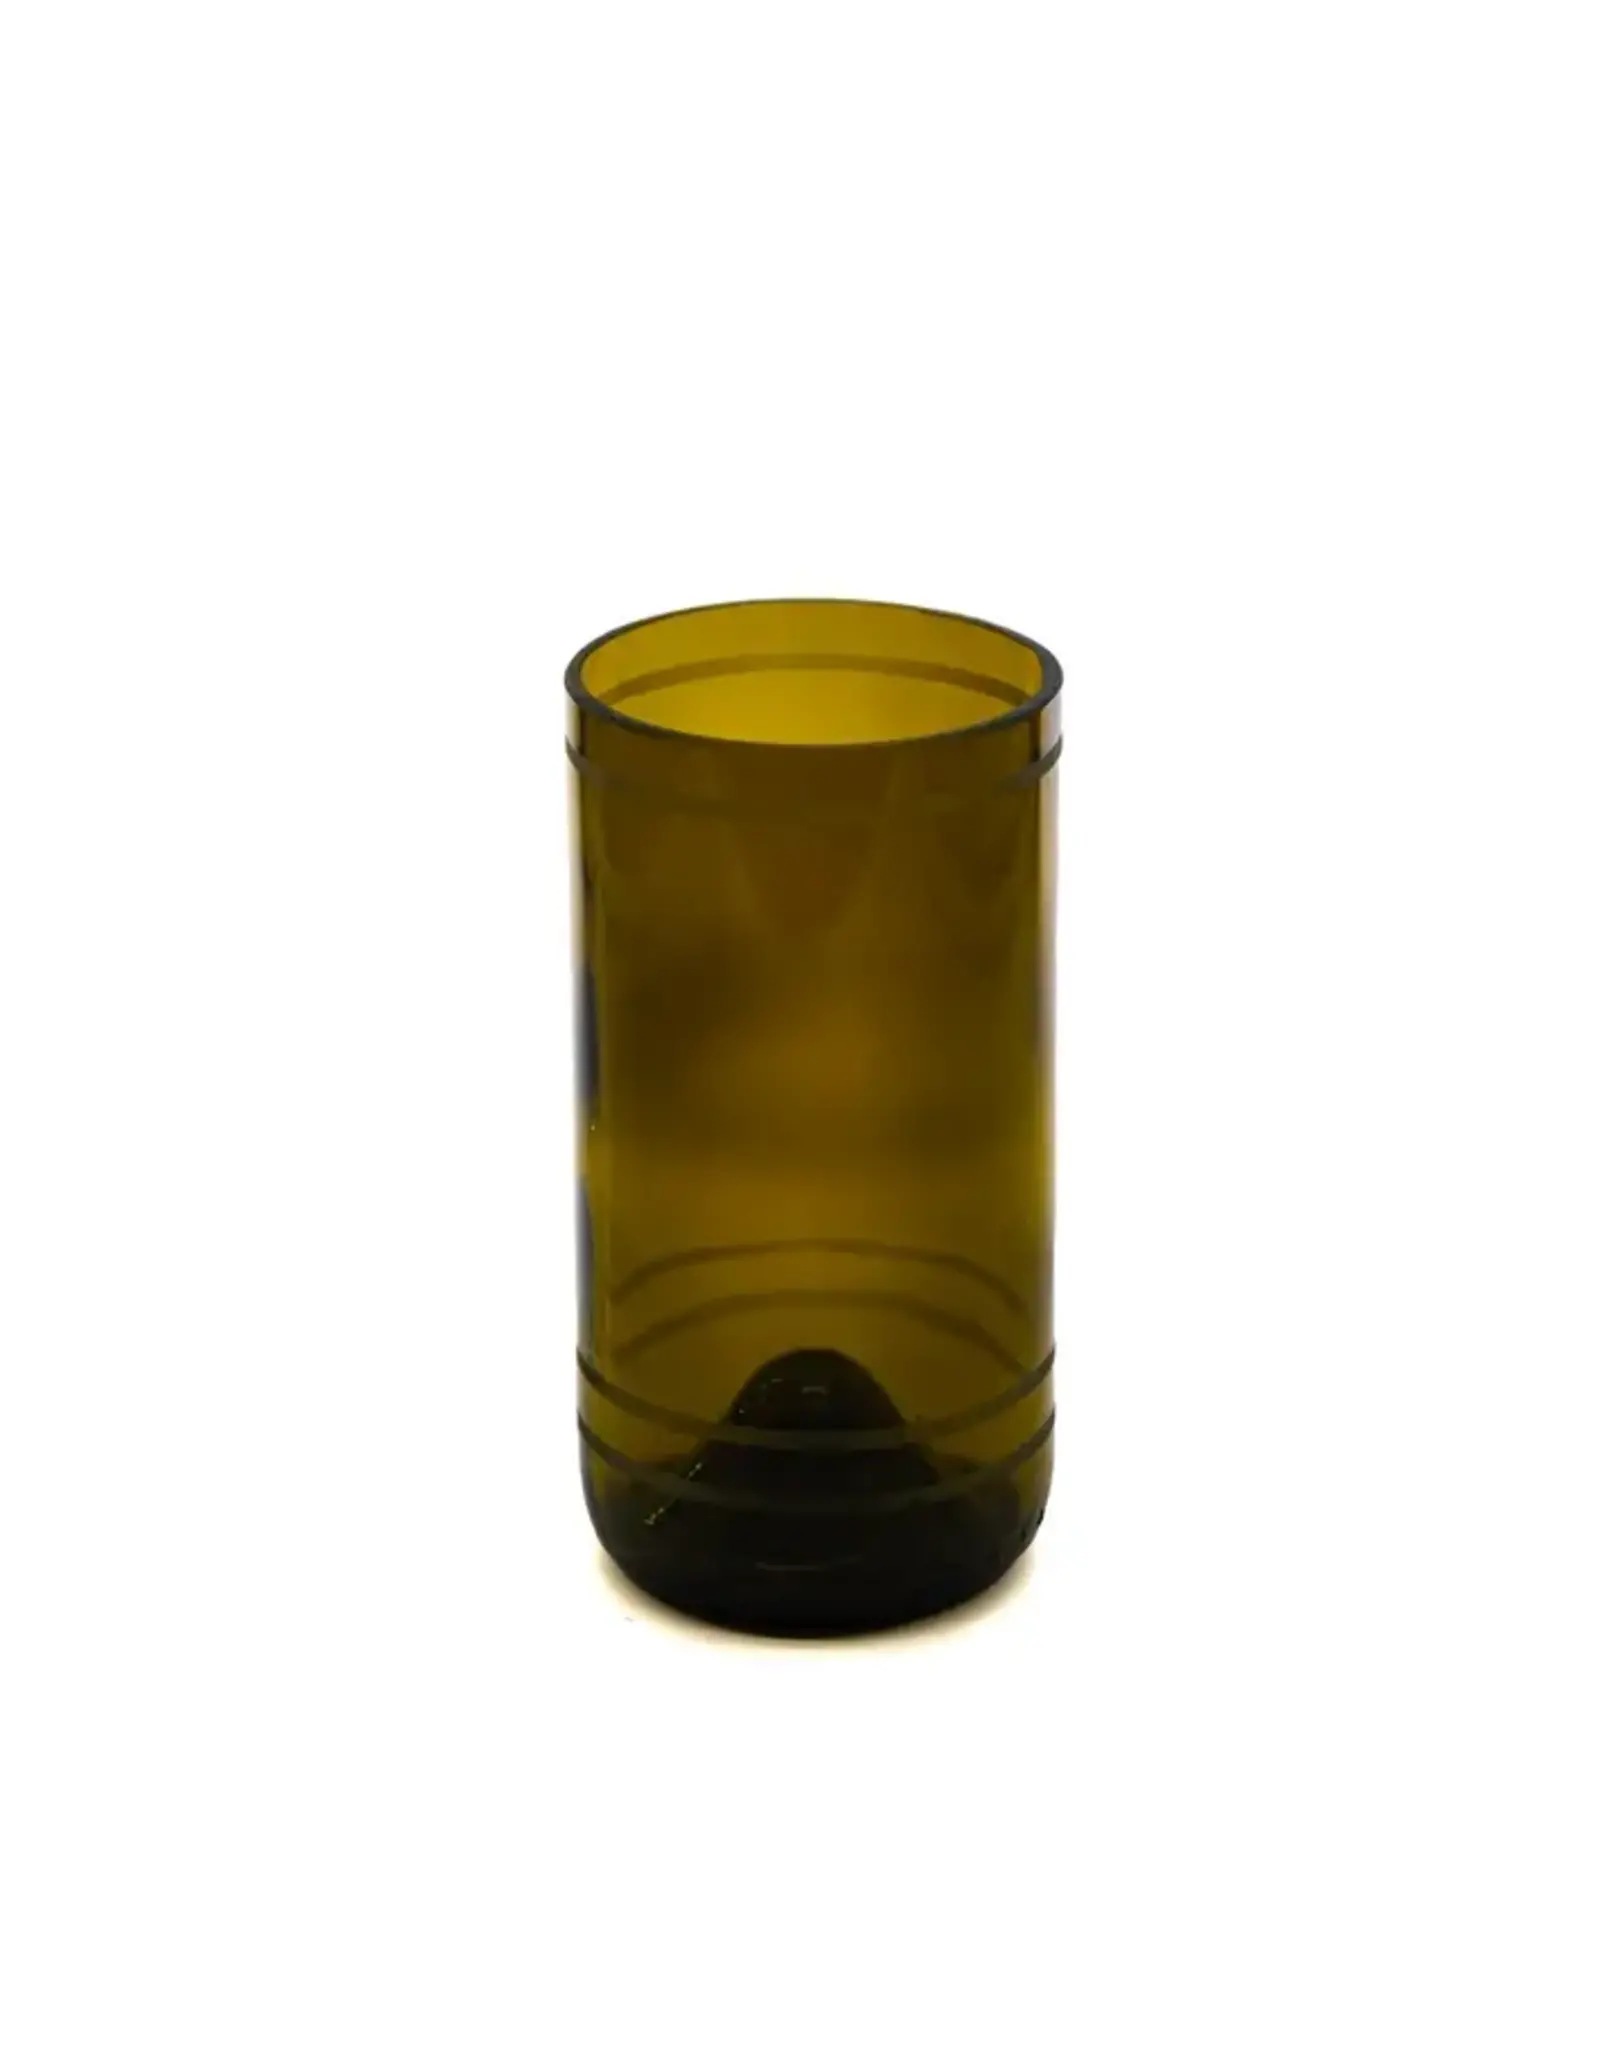 Egypt Upcycled Estekana Drinking Glass - Amber, Egypt